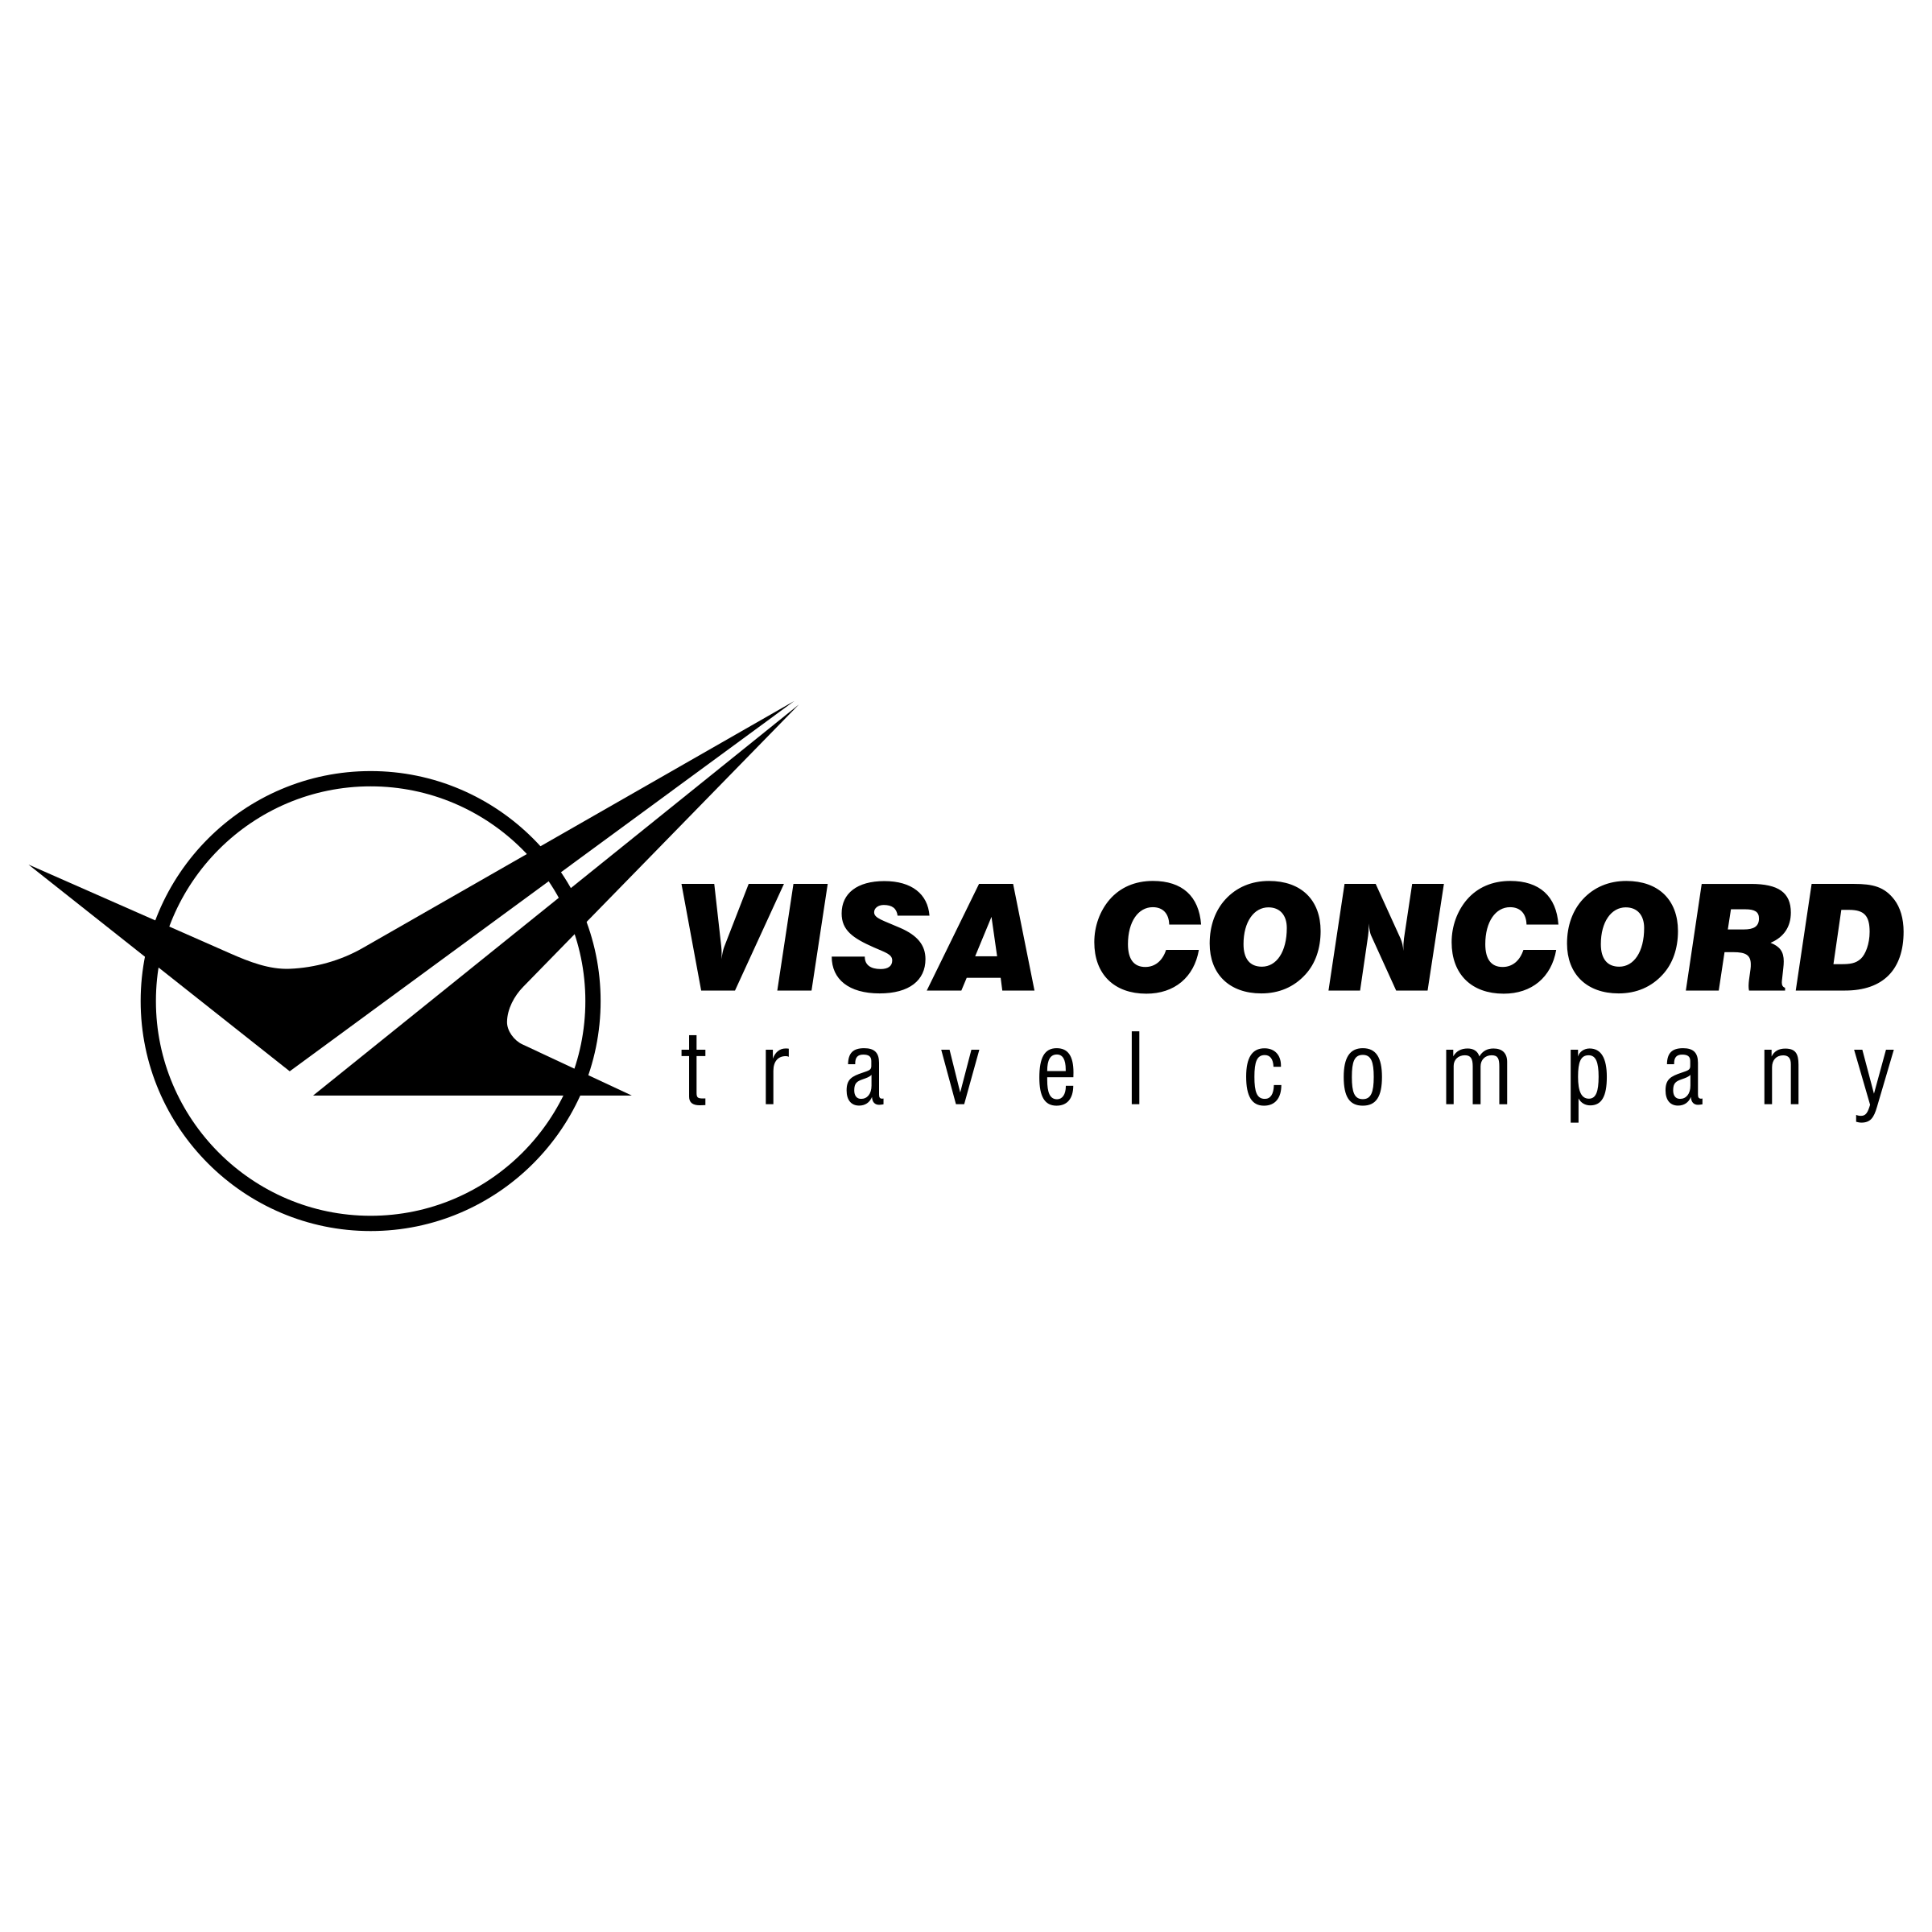 Concord Logo - Visa Concord Logo PNG Transparent & SVG Vector - Freebie Supply